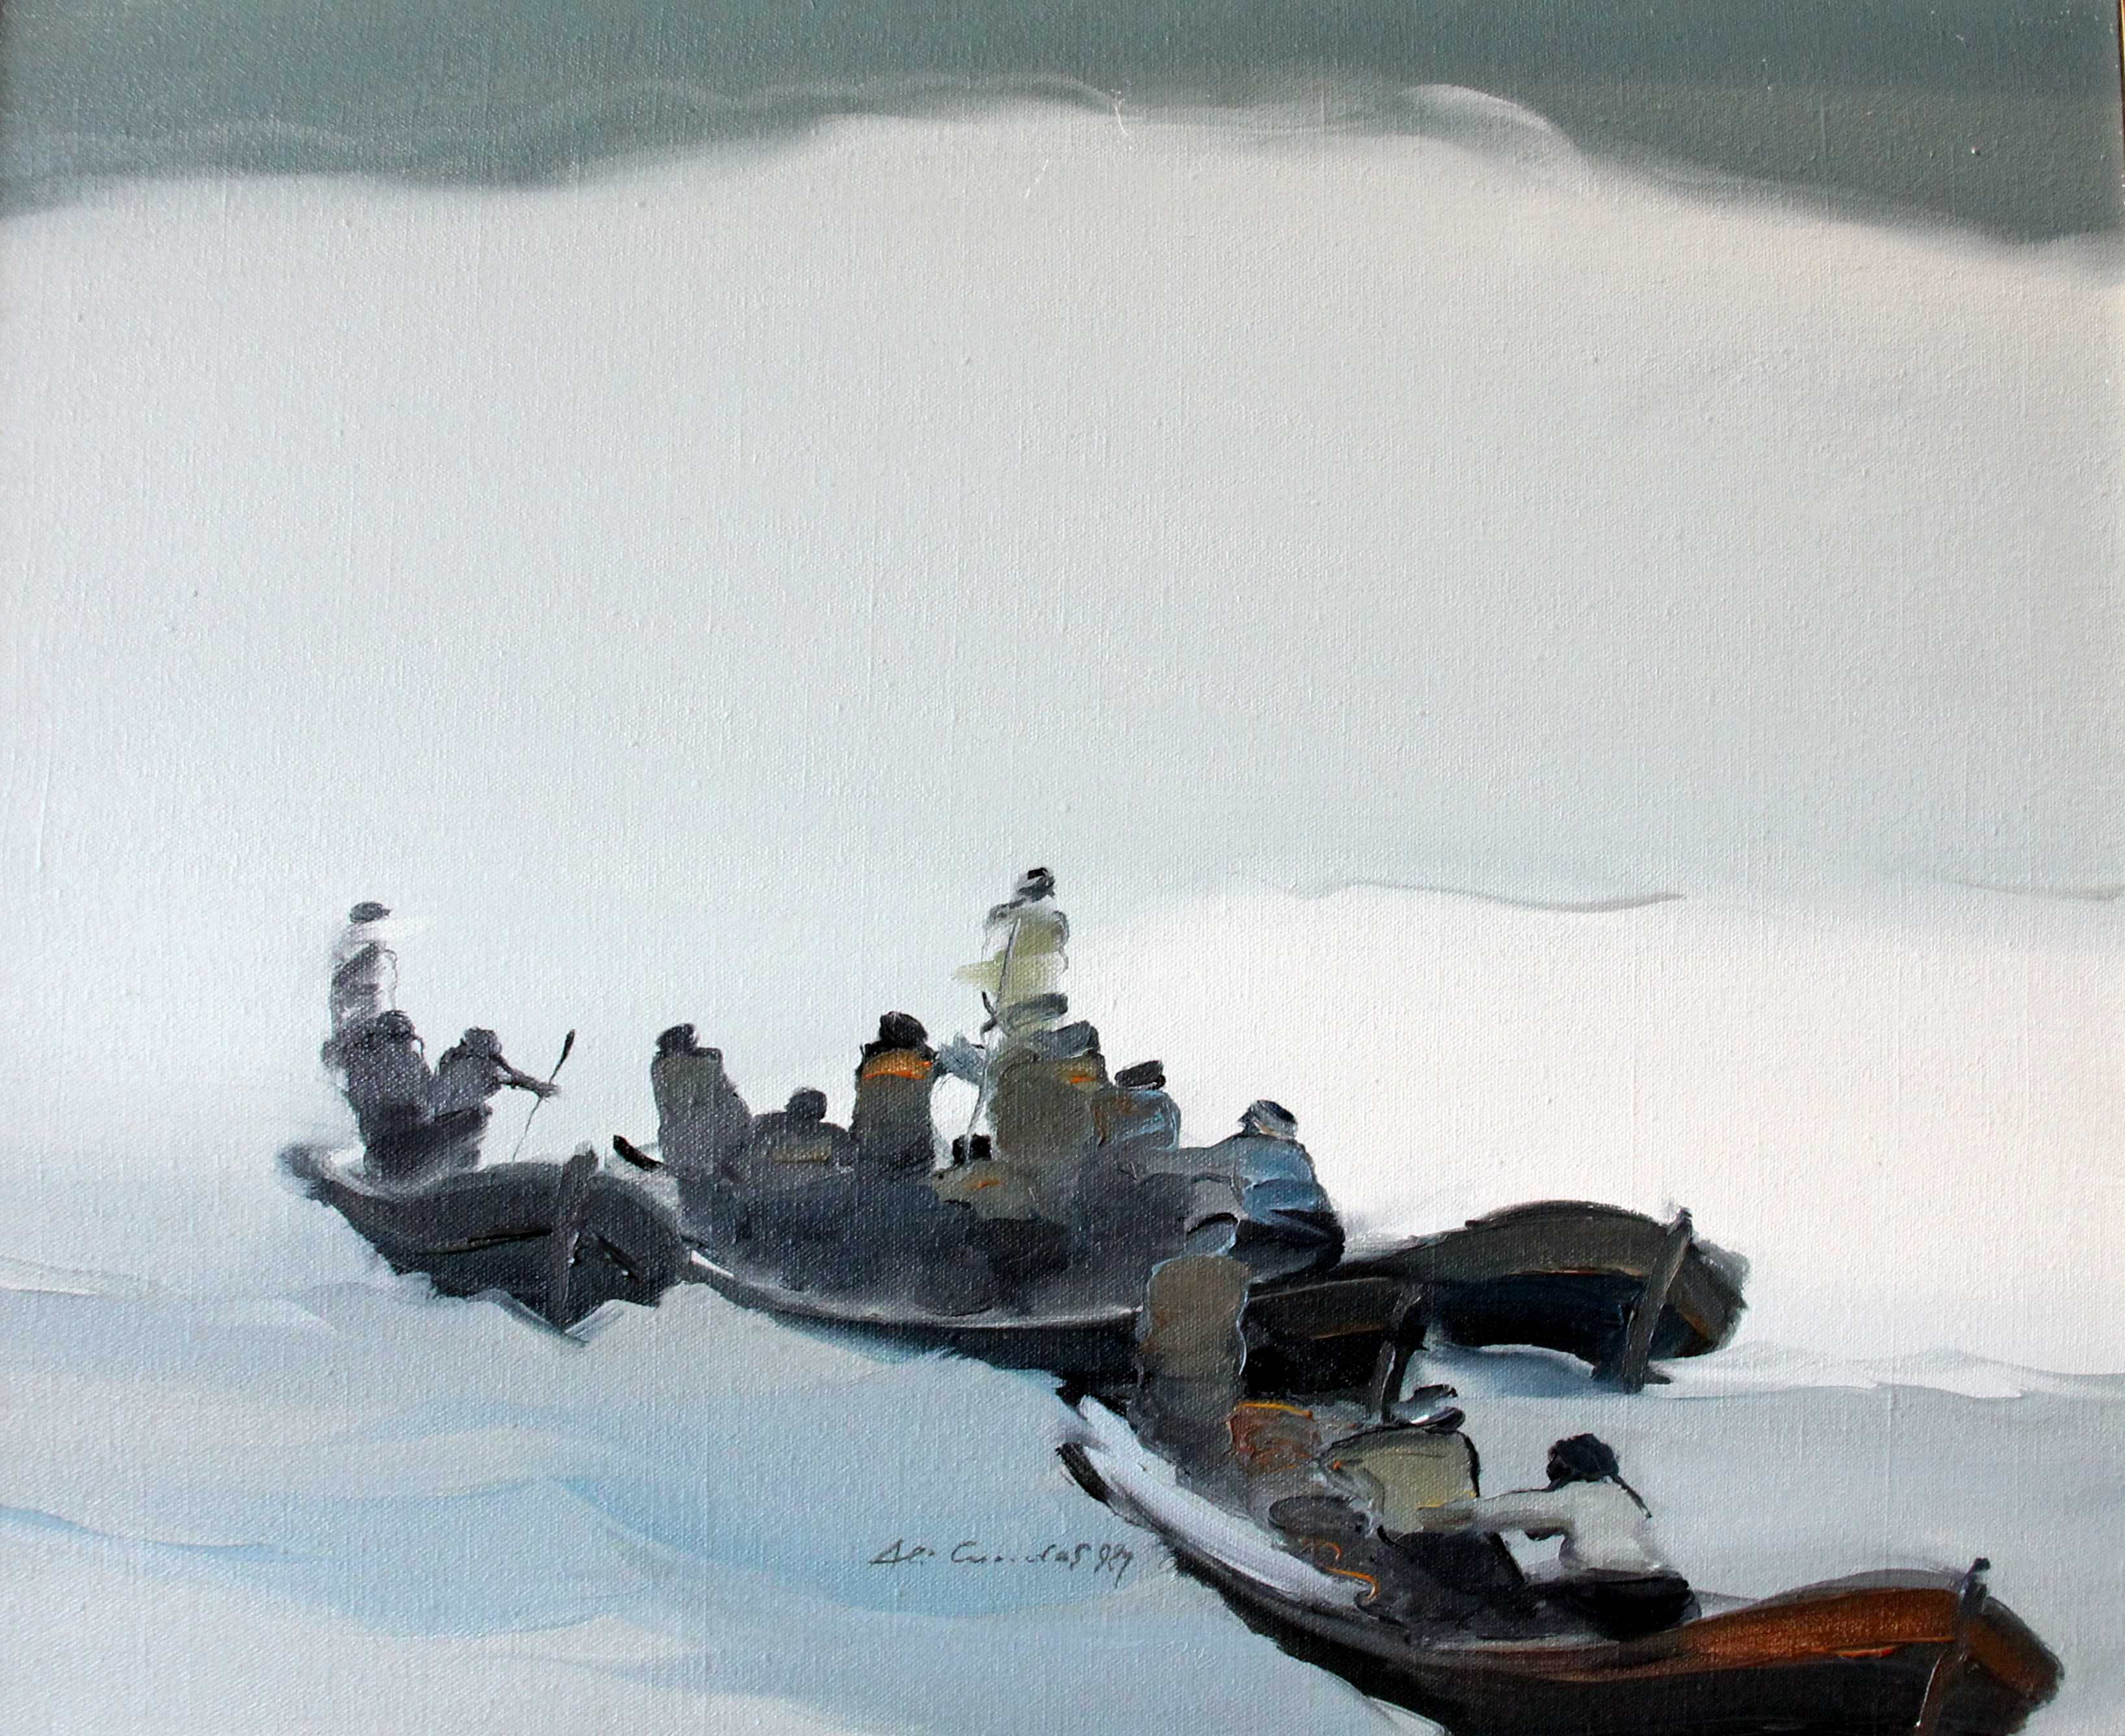 ALİ CANDAŞ, İsimsiz- Untitled, 1989, Tuval üzerine yağlıboya- Oil on canvas, 45x55 cm